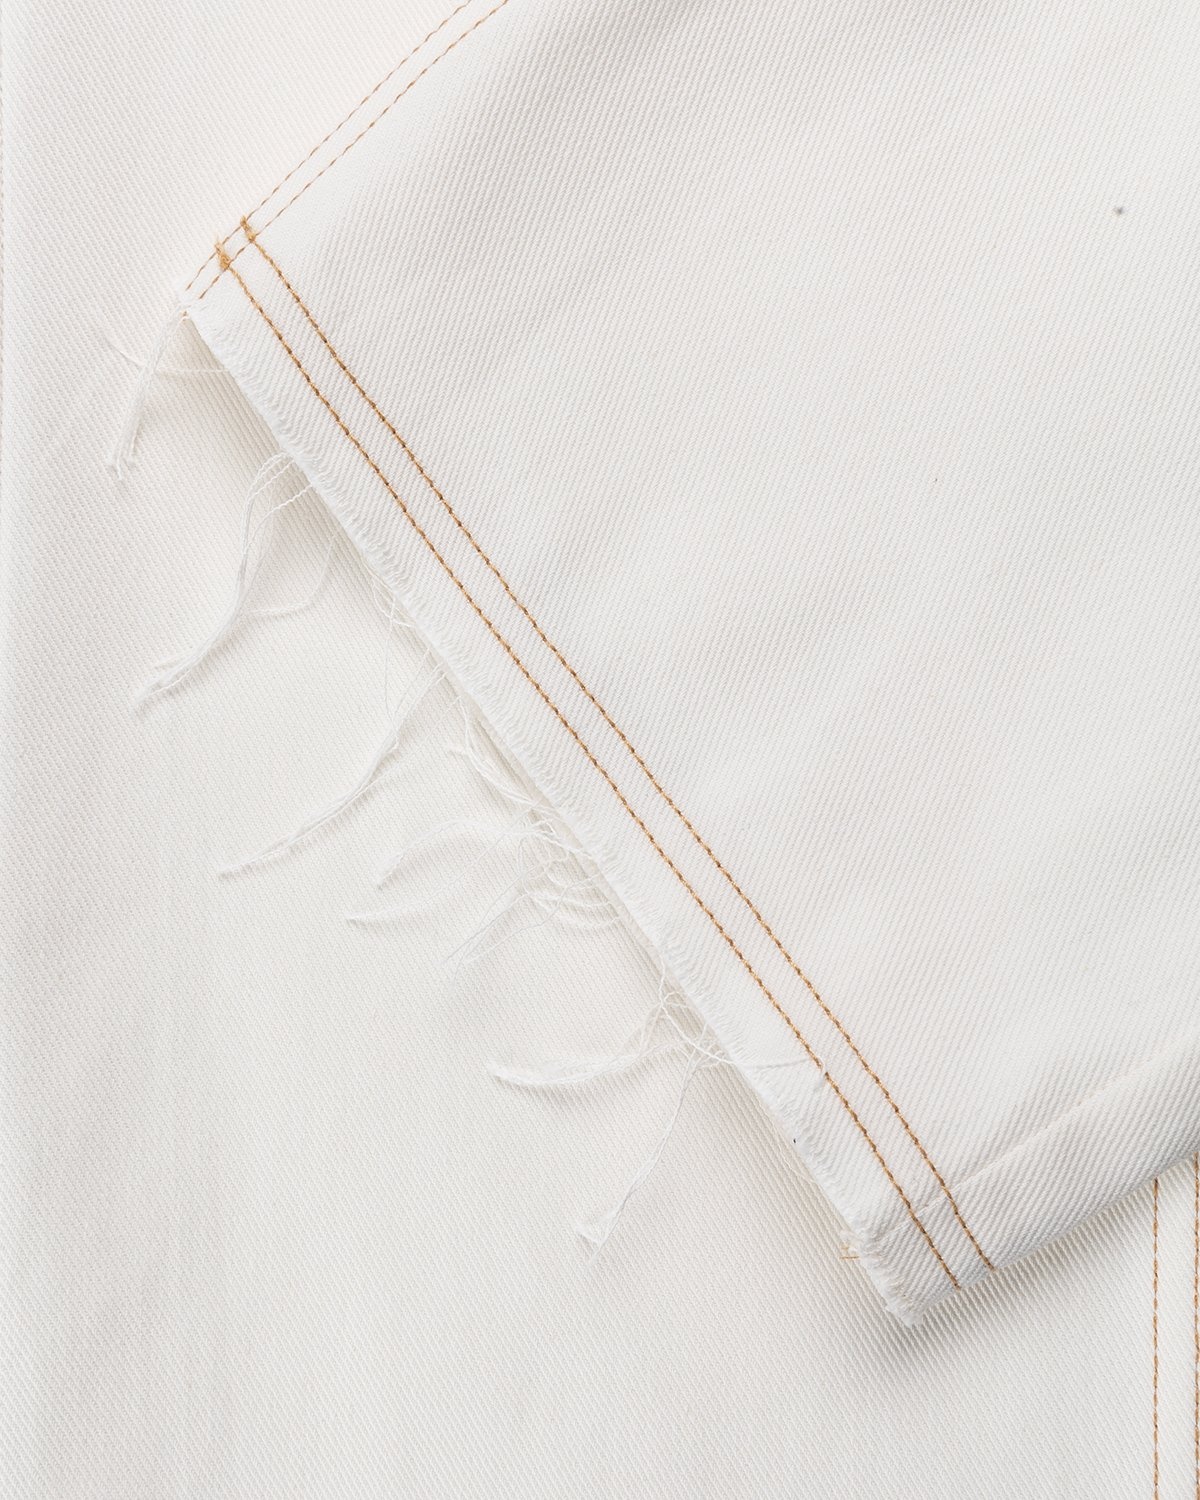 Loewe – Paula's Ibiza Boot Cut Denim Trousers White - Pants - White - Image 5